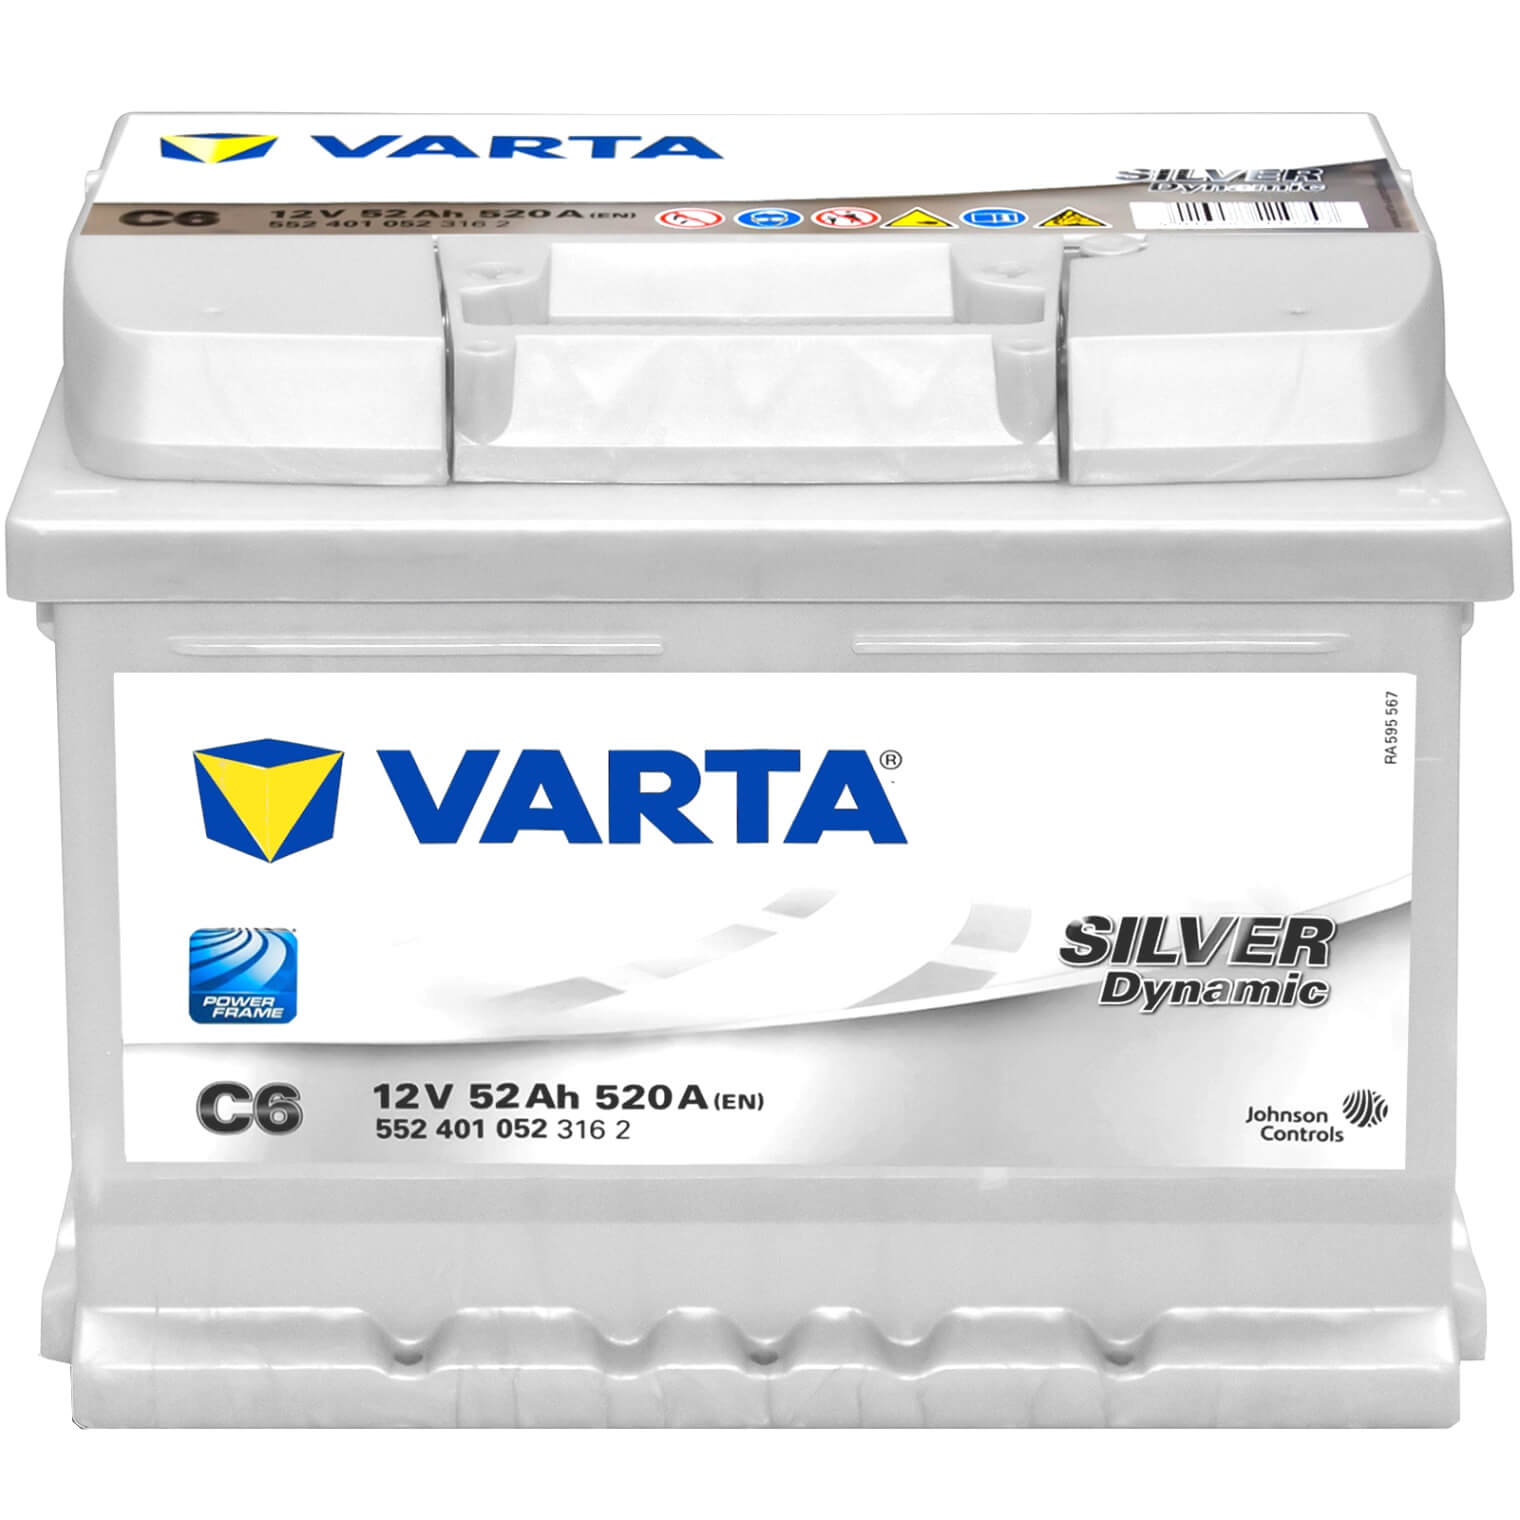 Varta C6 Silver Dynamic 12V 52Ah 520A/EN